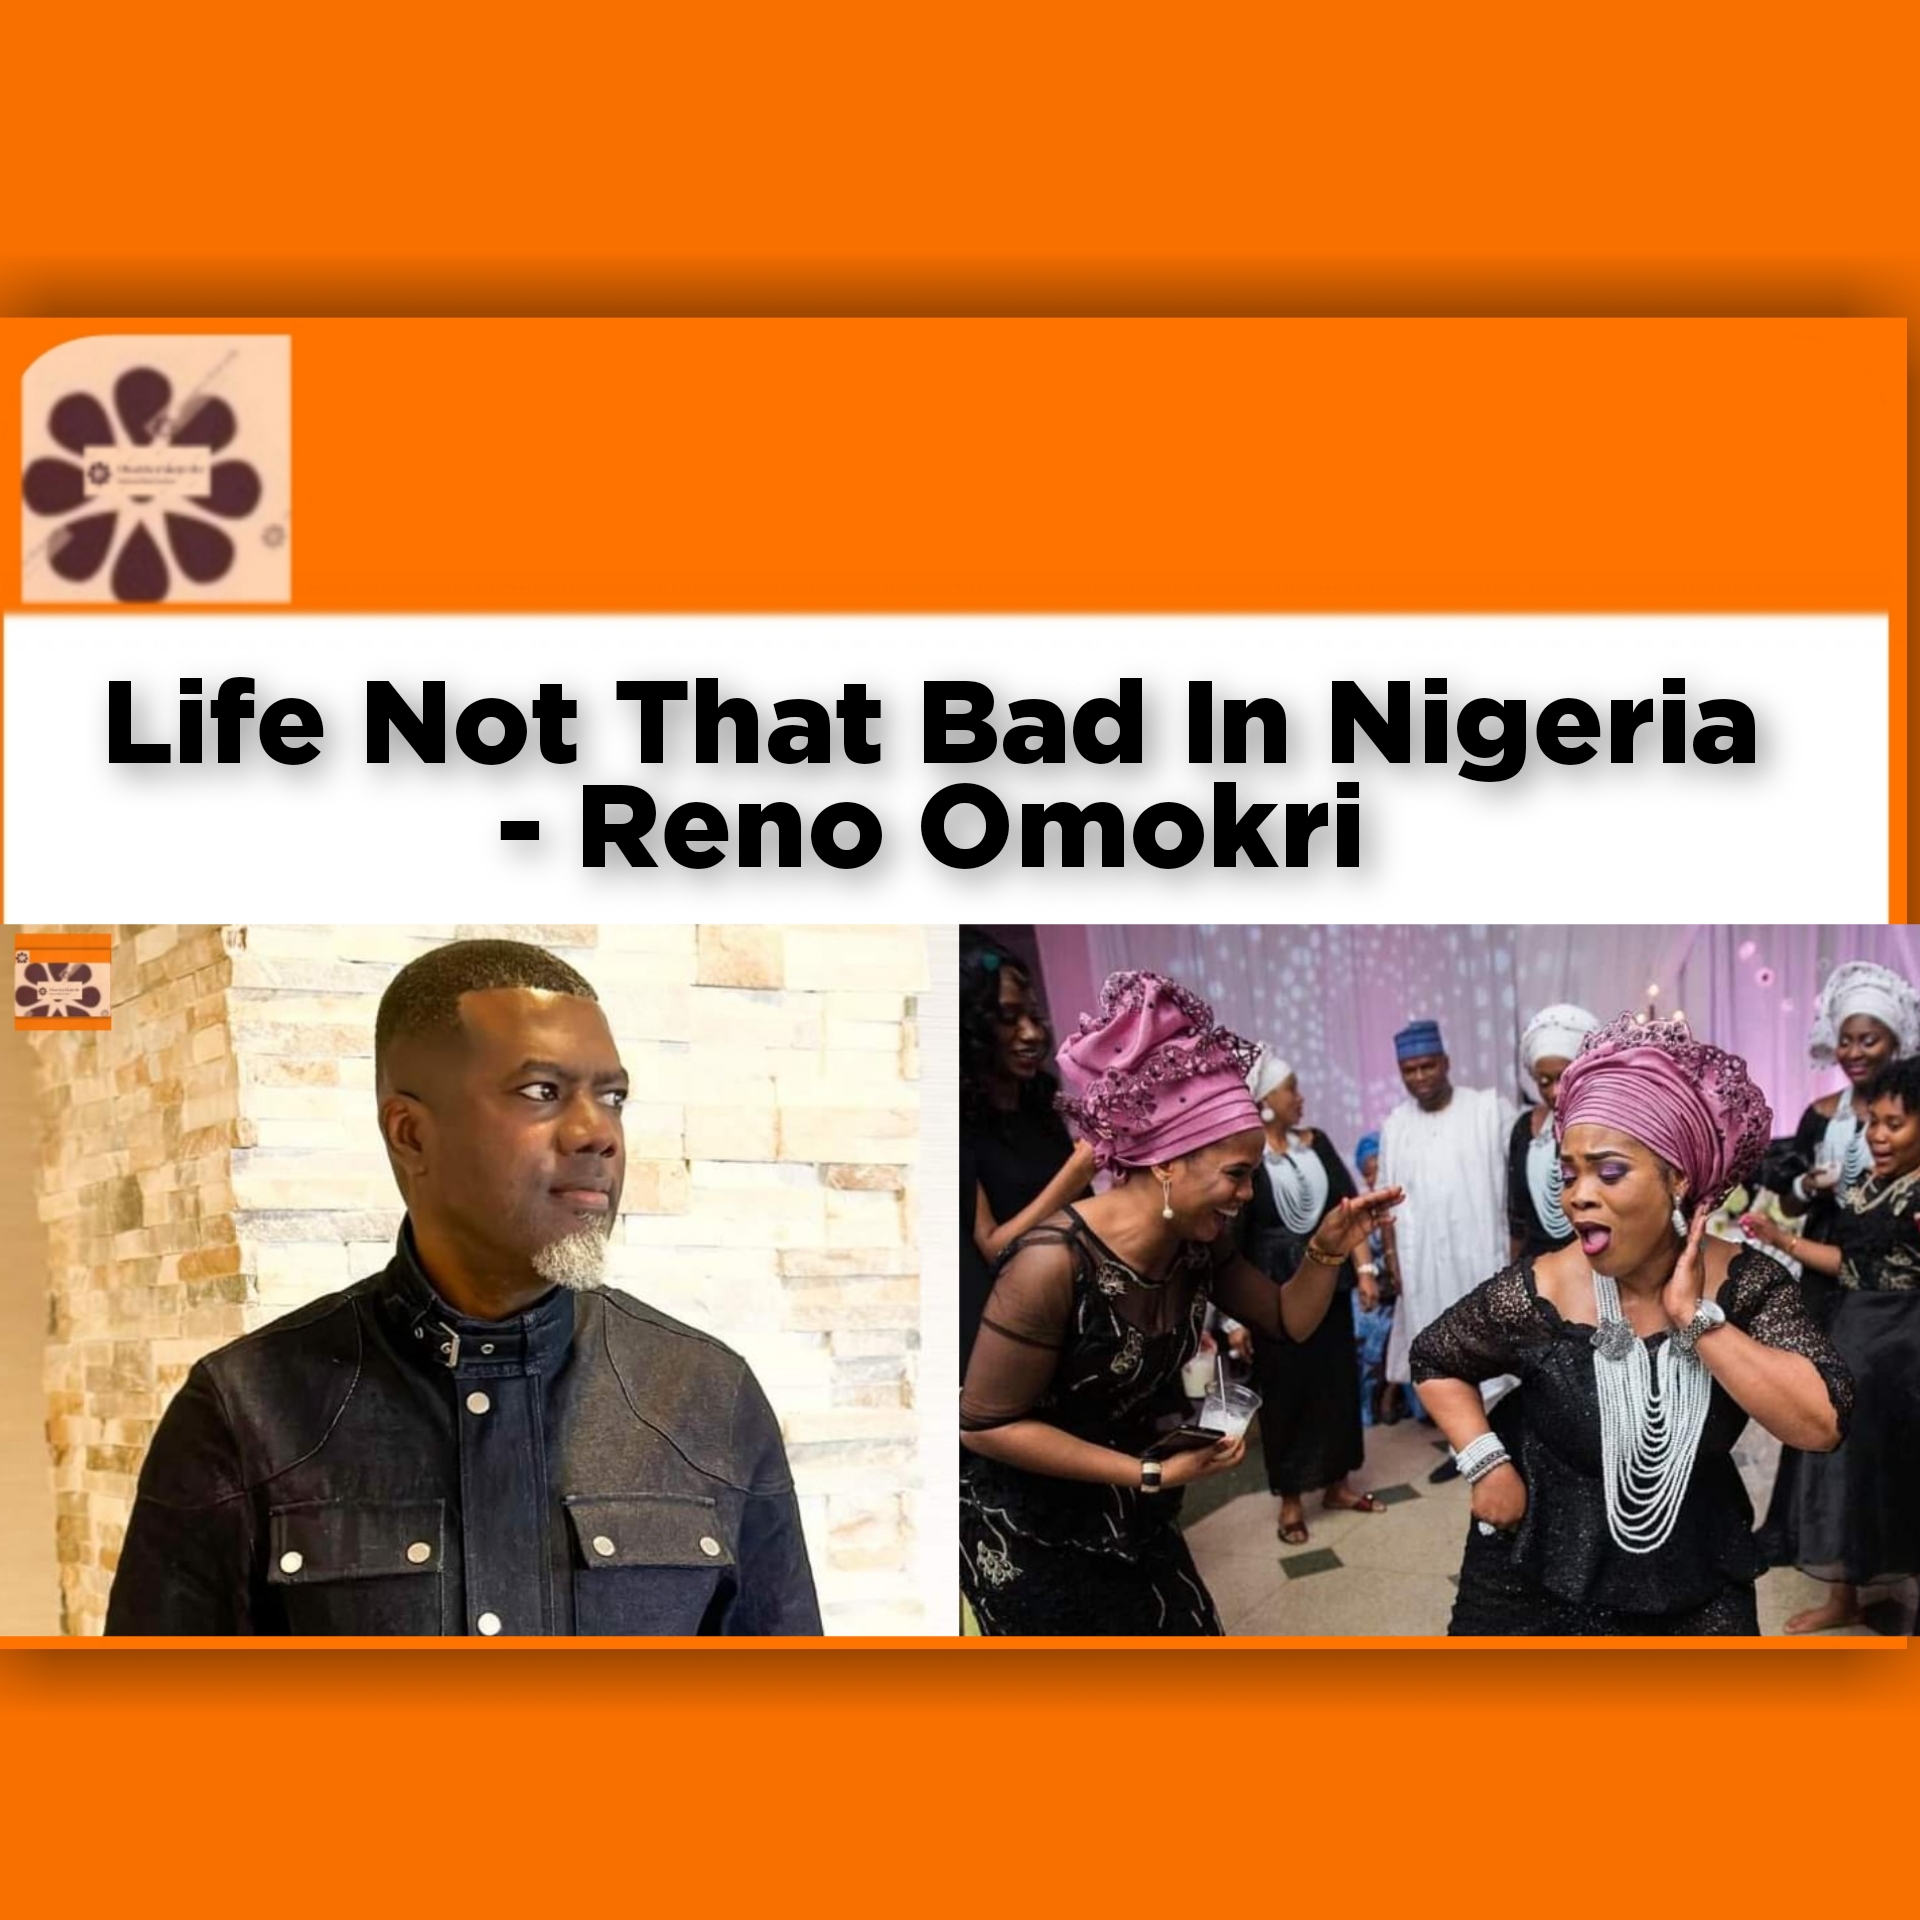 Life Not That Bad In Nigeria - Reno Omokri ~ OsazuwaAkonedo #America #Americans #Bible #columns #economy #Education #Europe #God #job #media #Nigeria #Nigerian #Nigerians #Omokri #OsazuwaAkonedo #Reno #Transplant #workers